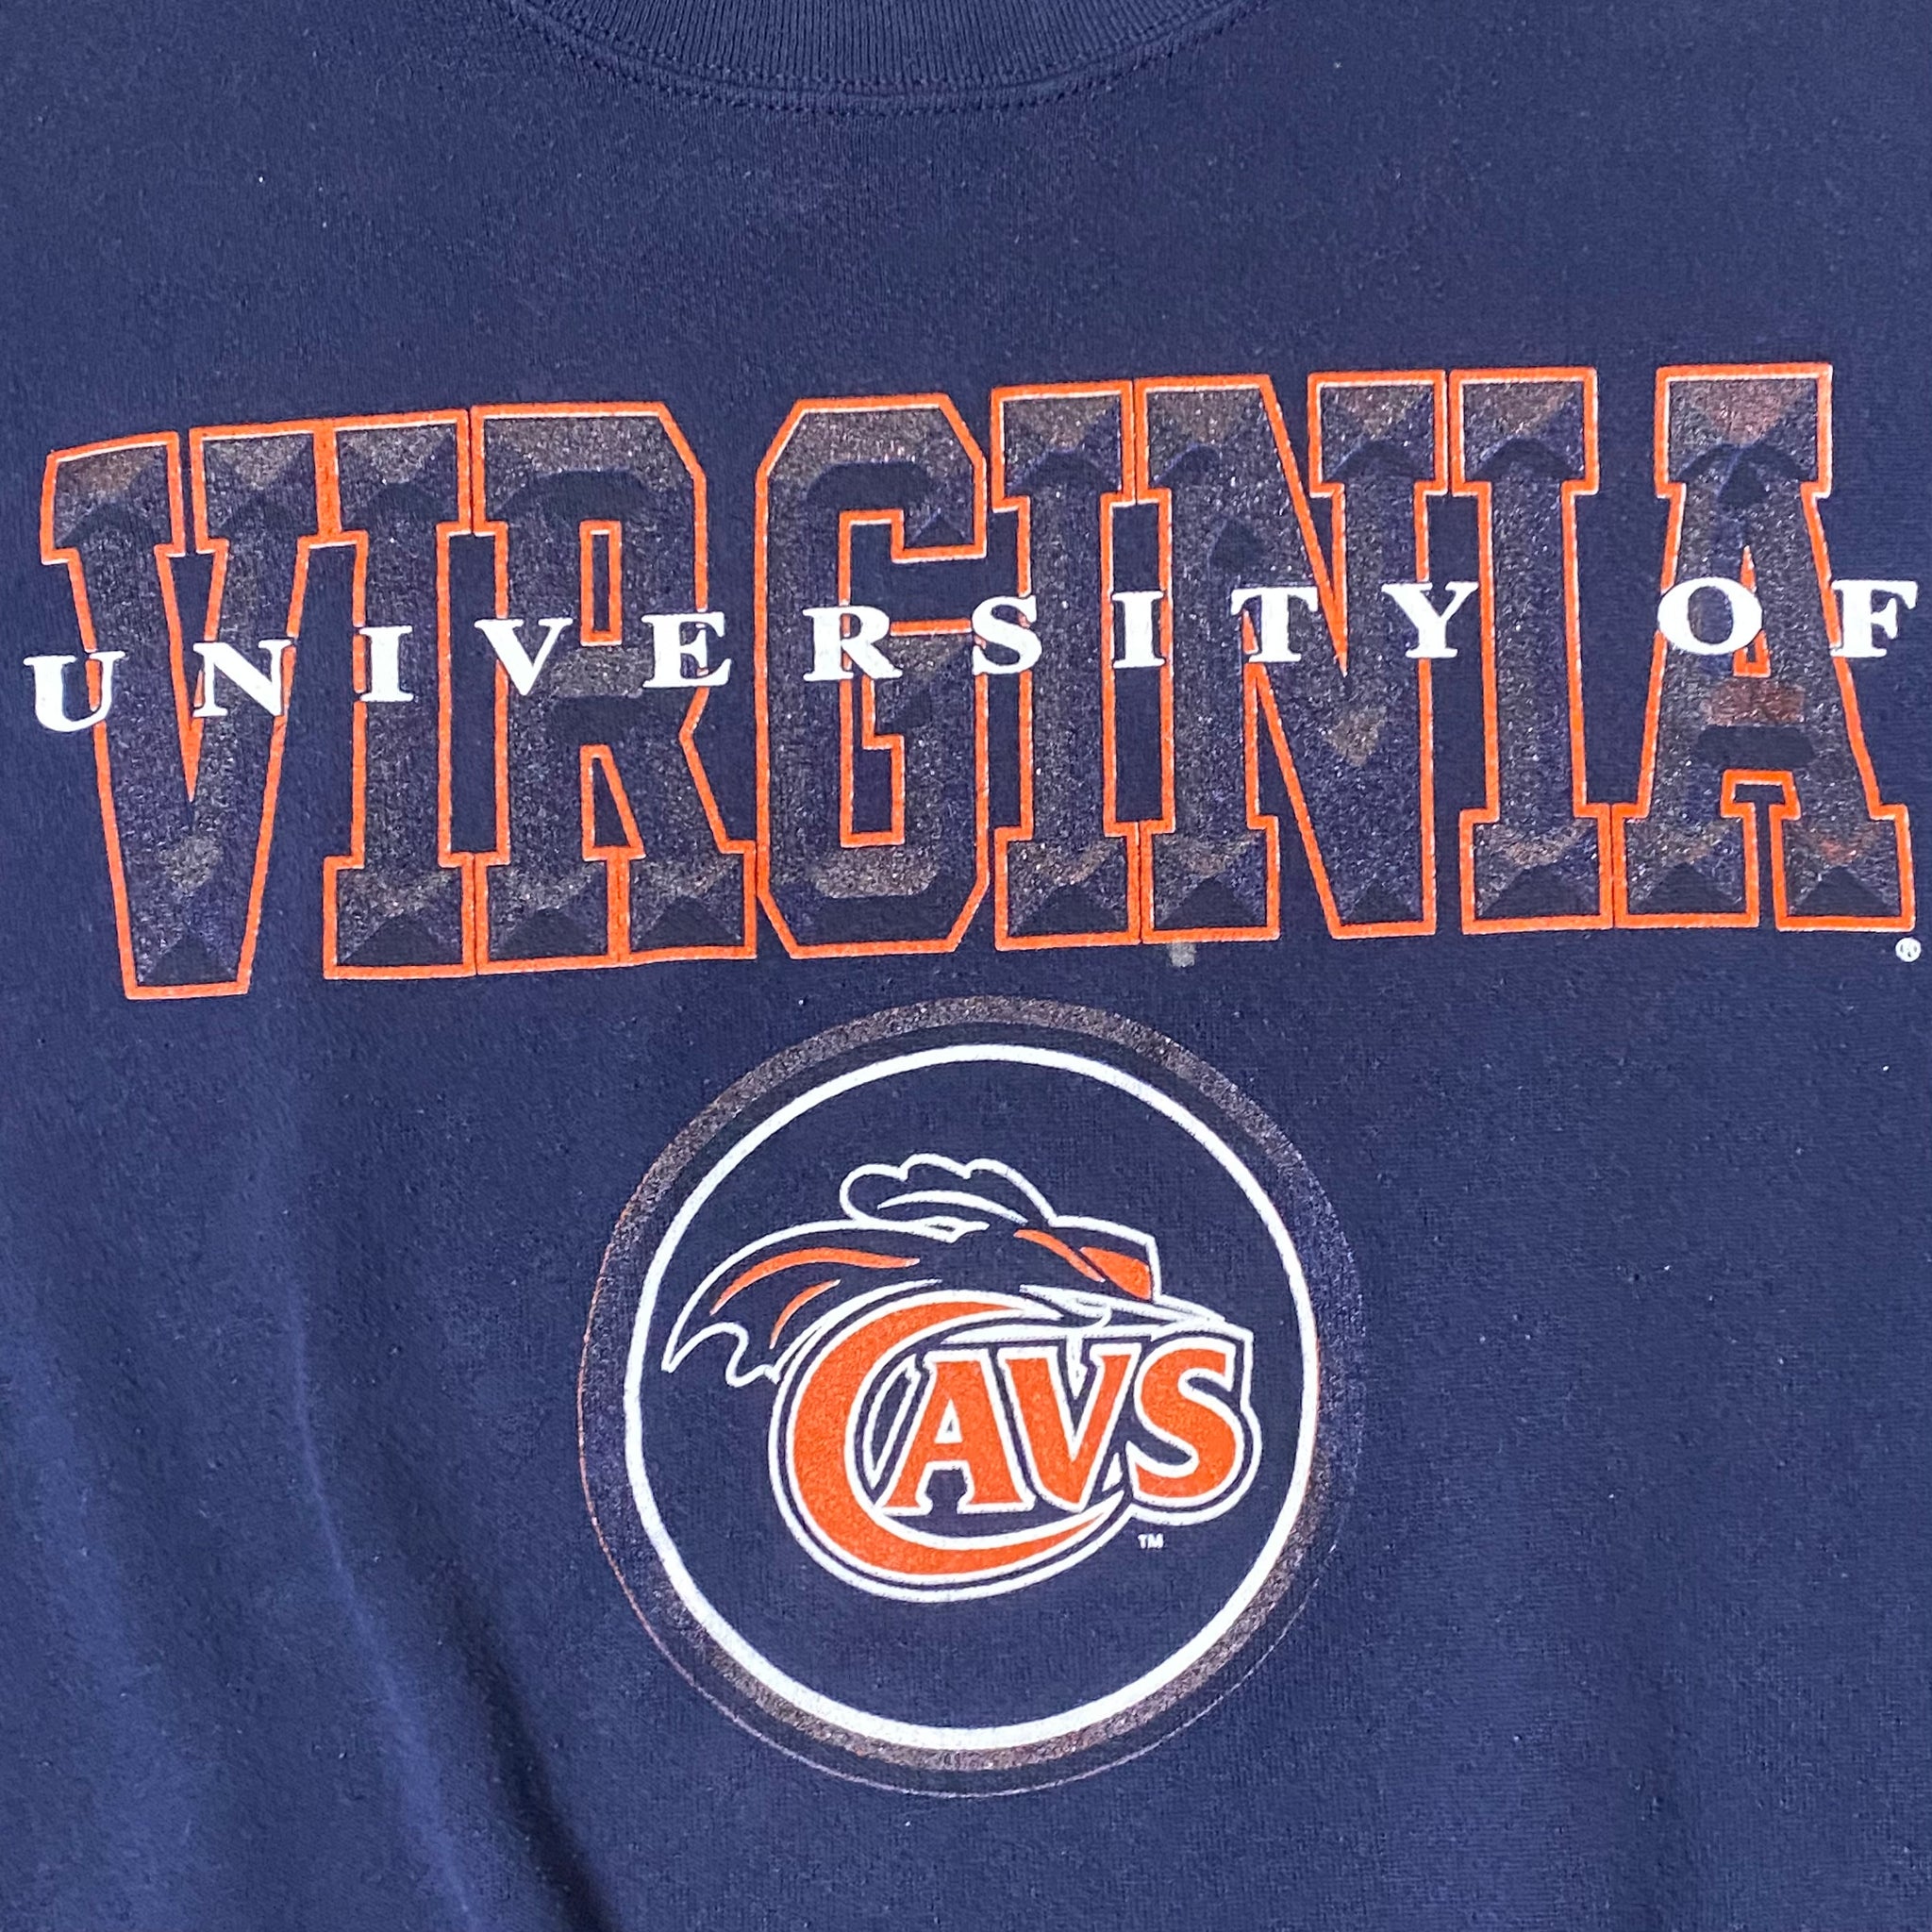 Vintage 90s Clothing University of Virginia UVA Cavaliers Men 